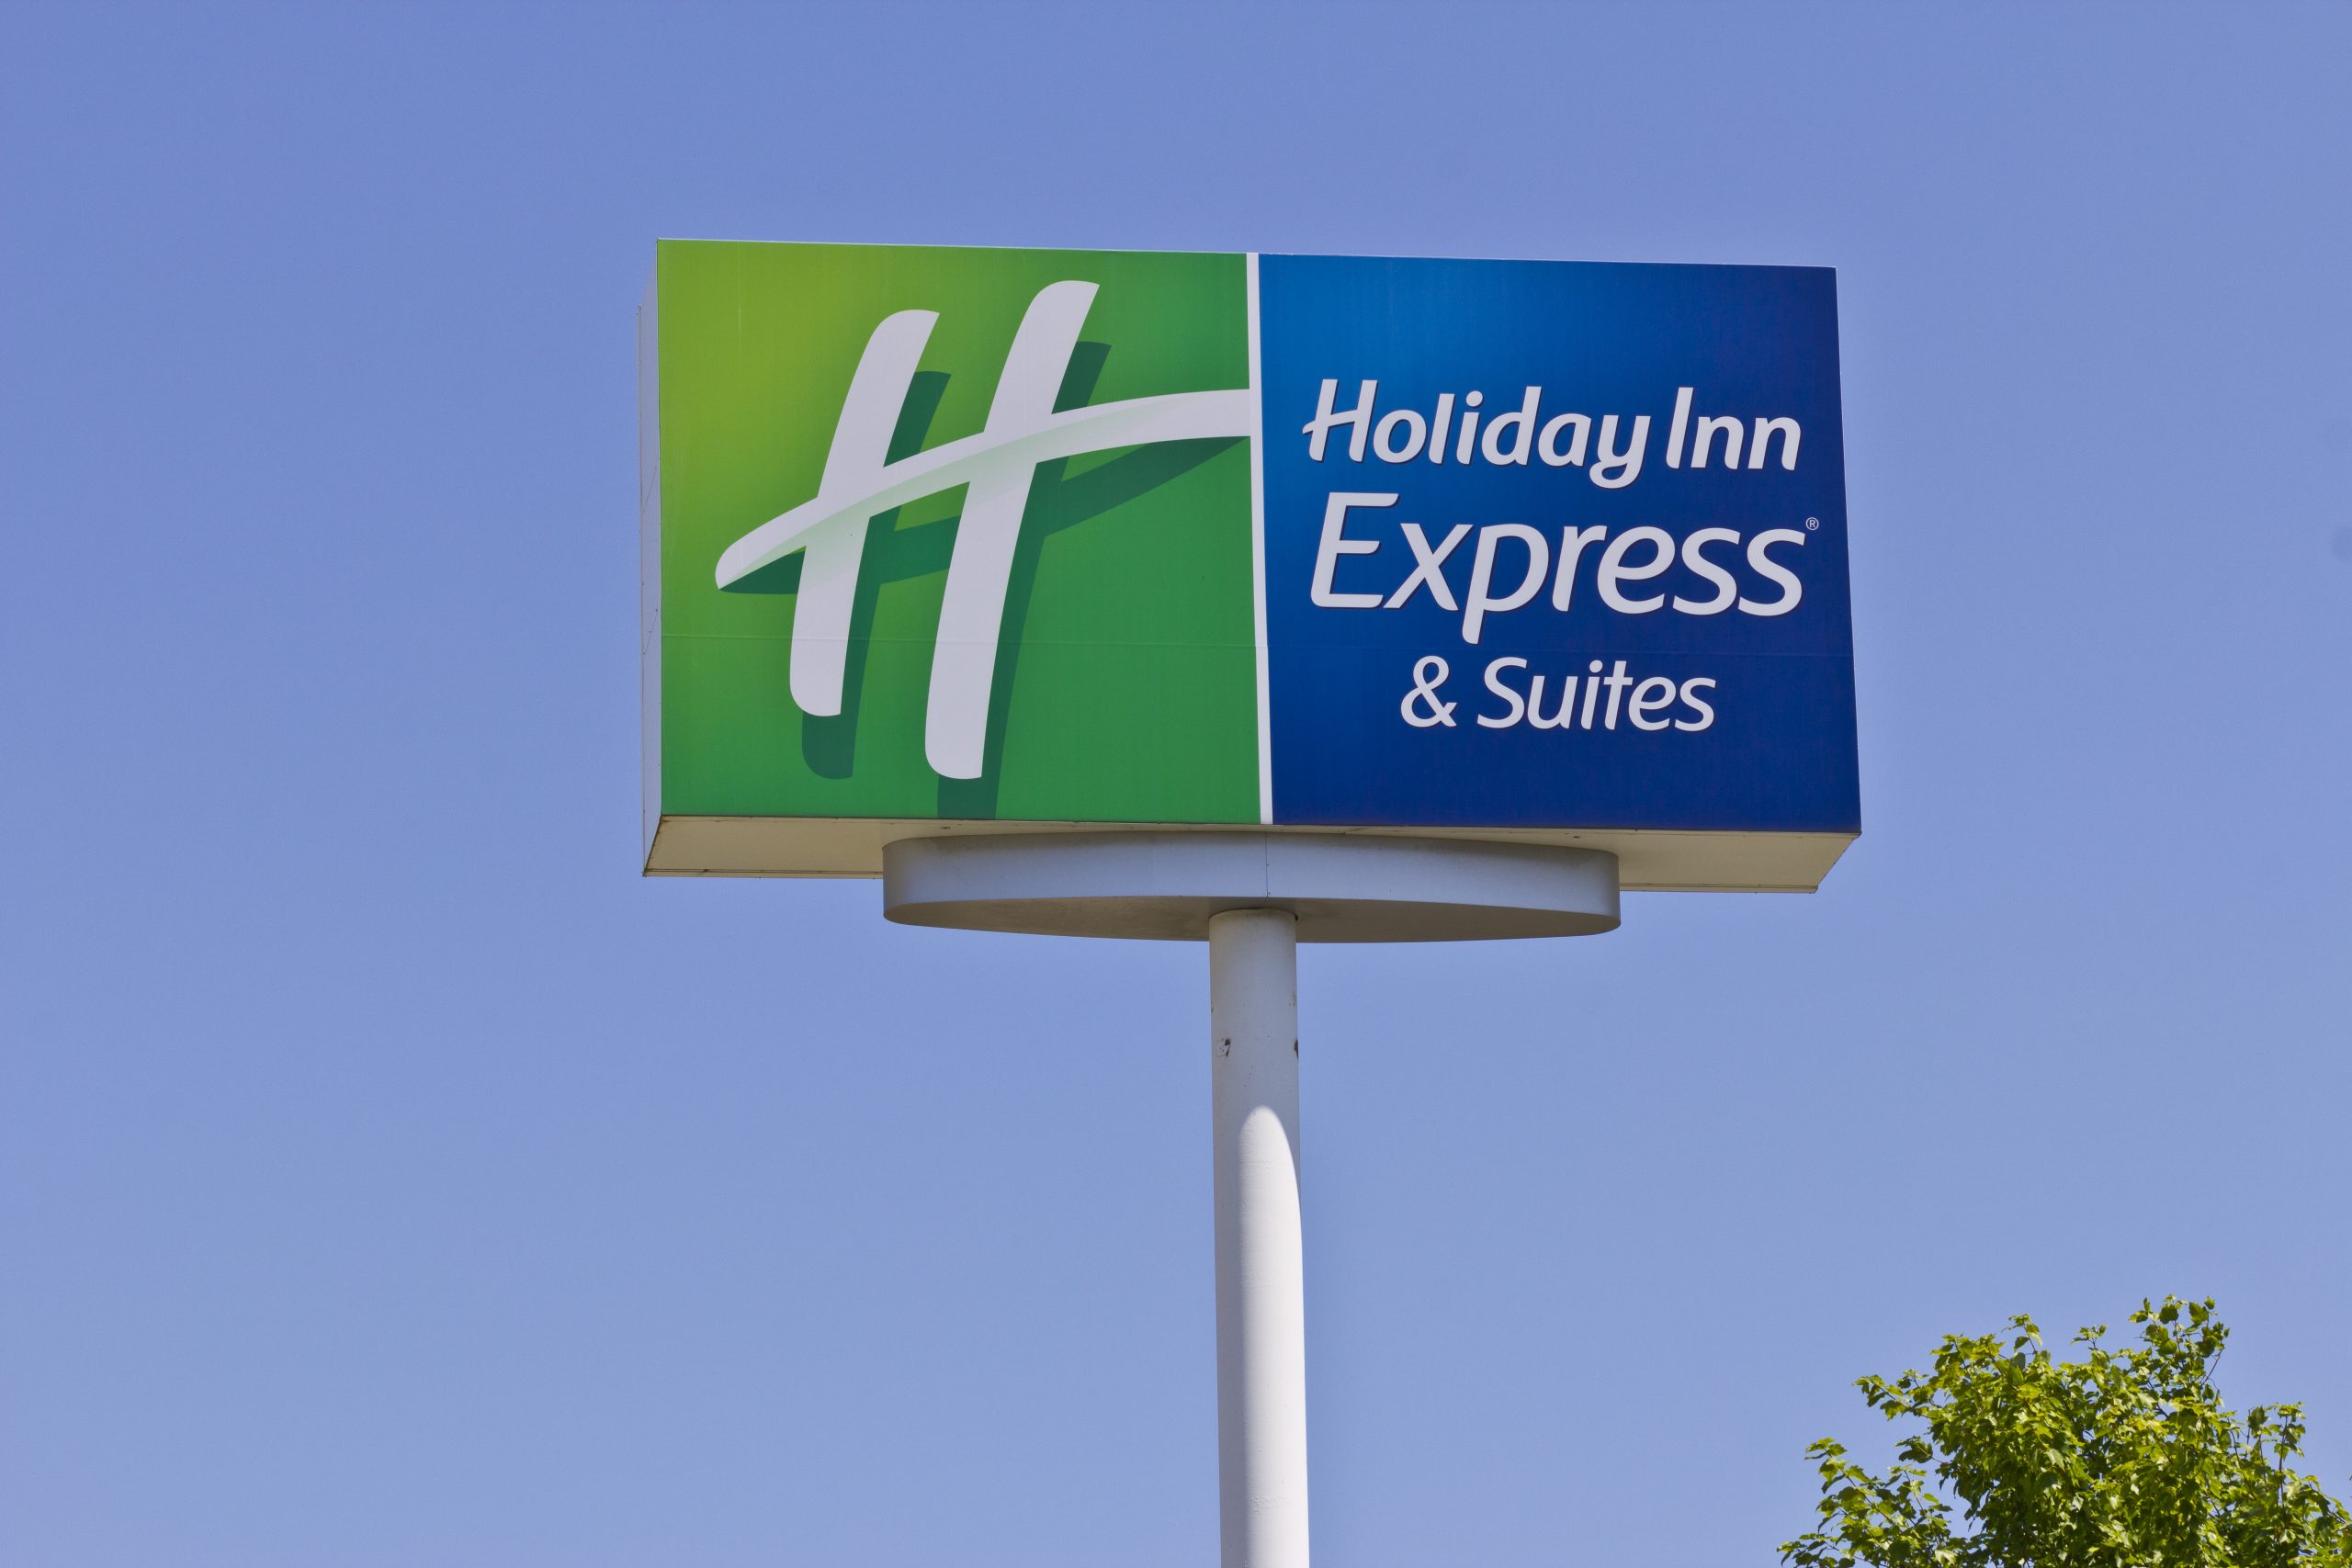 Holiday Inn Express, a Subsidiary of IHG